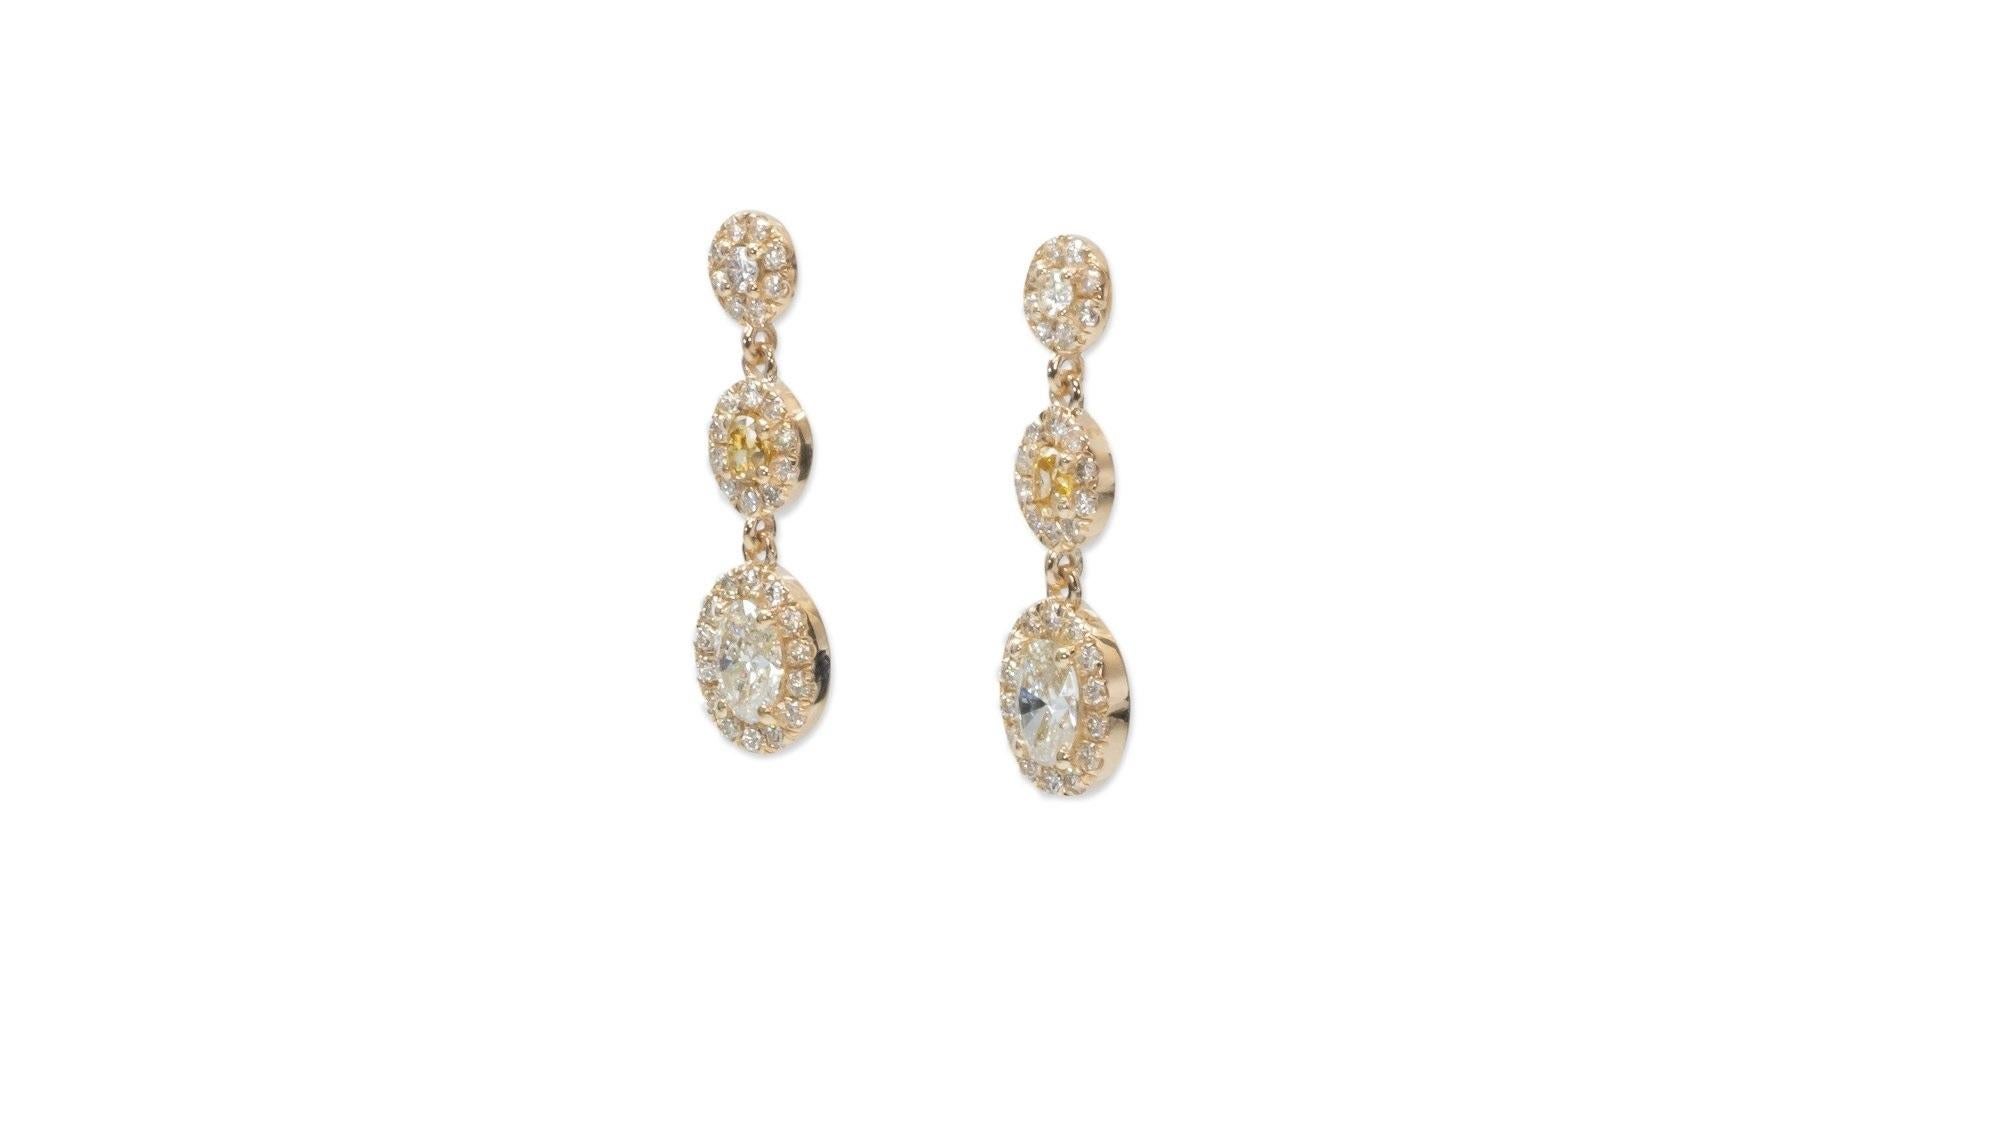 Women's Beautiful 18K Yellow Gold Earrings with 2.22 carat Natural Diamonds- AIG Cert